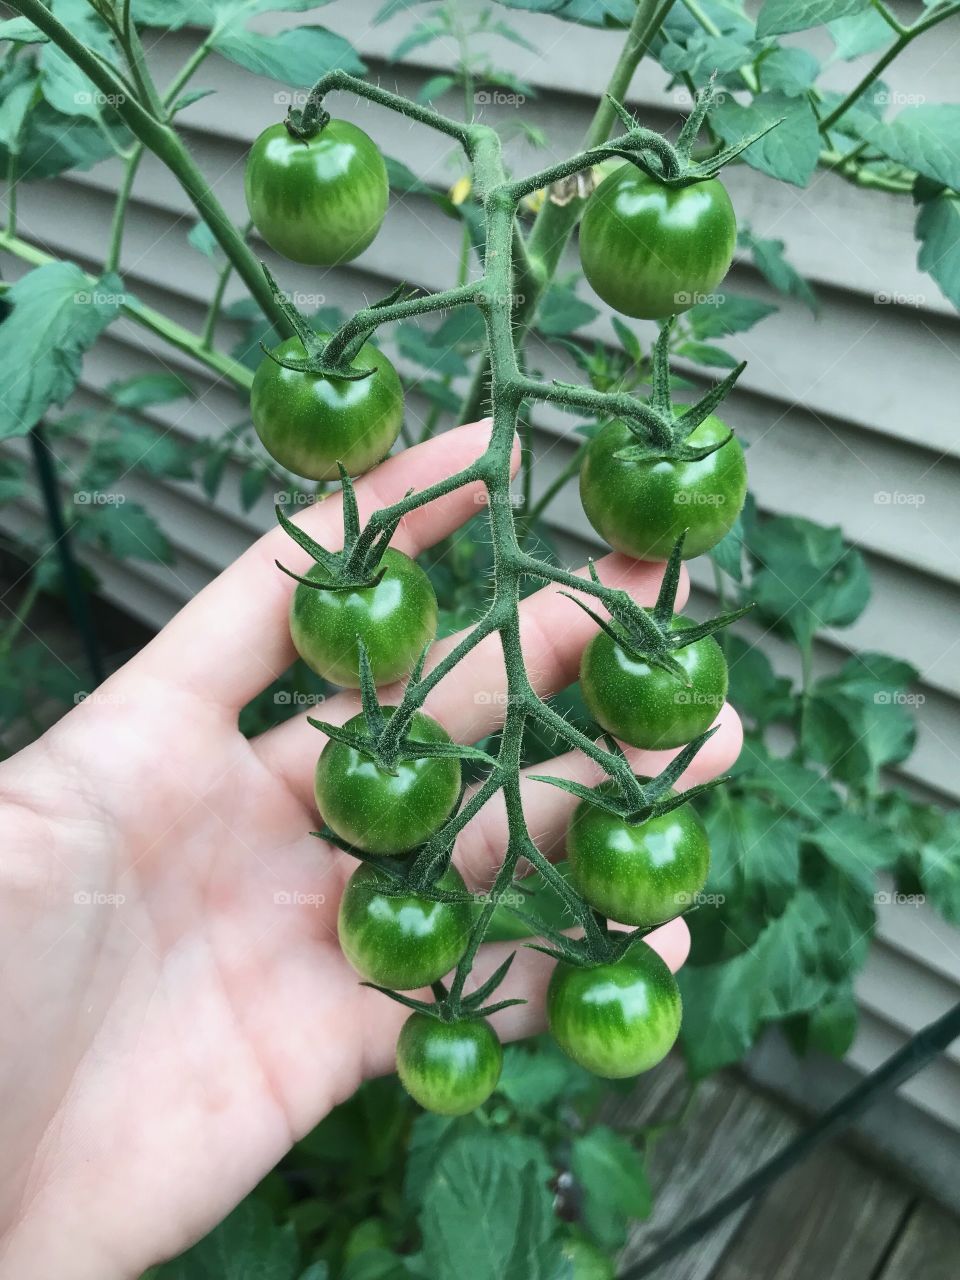 perfect tomato symmetry 